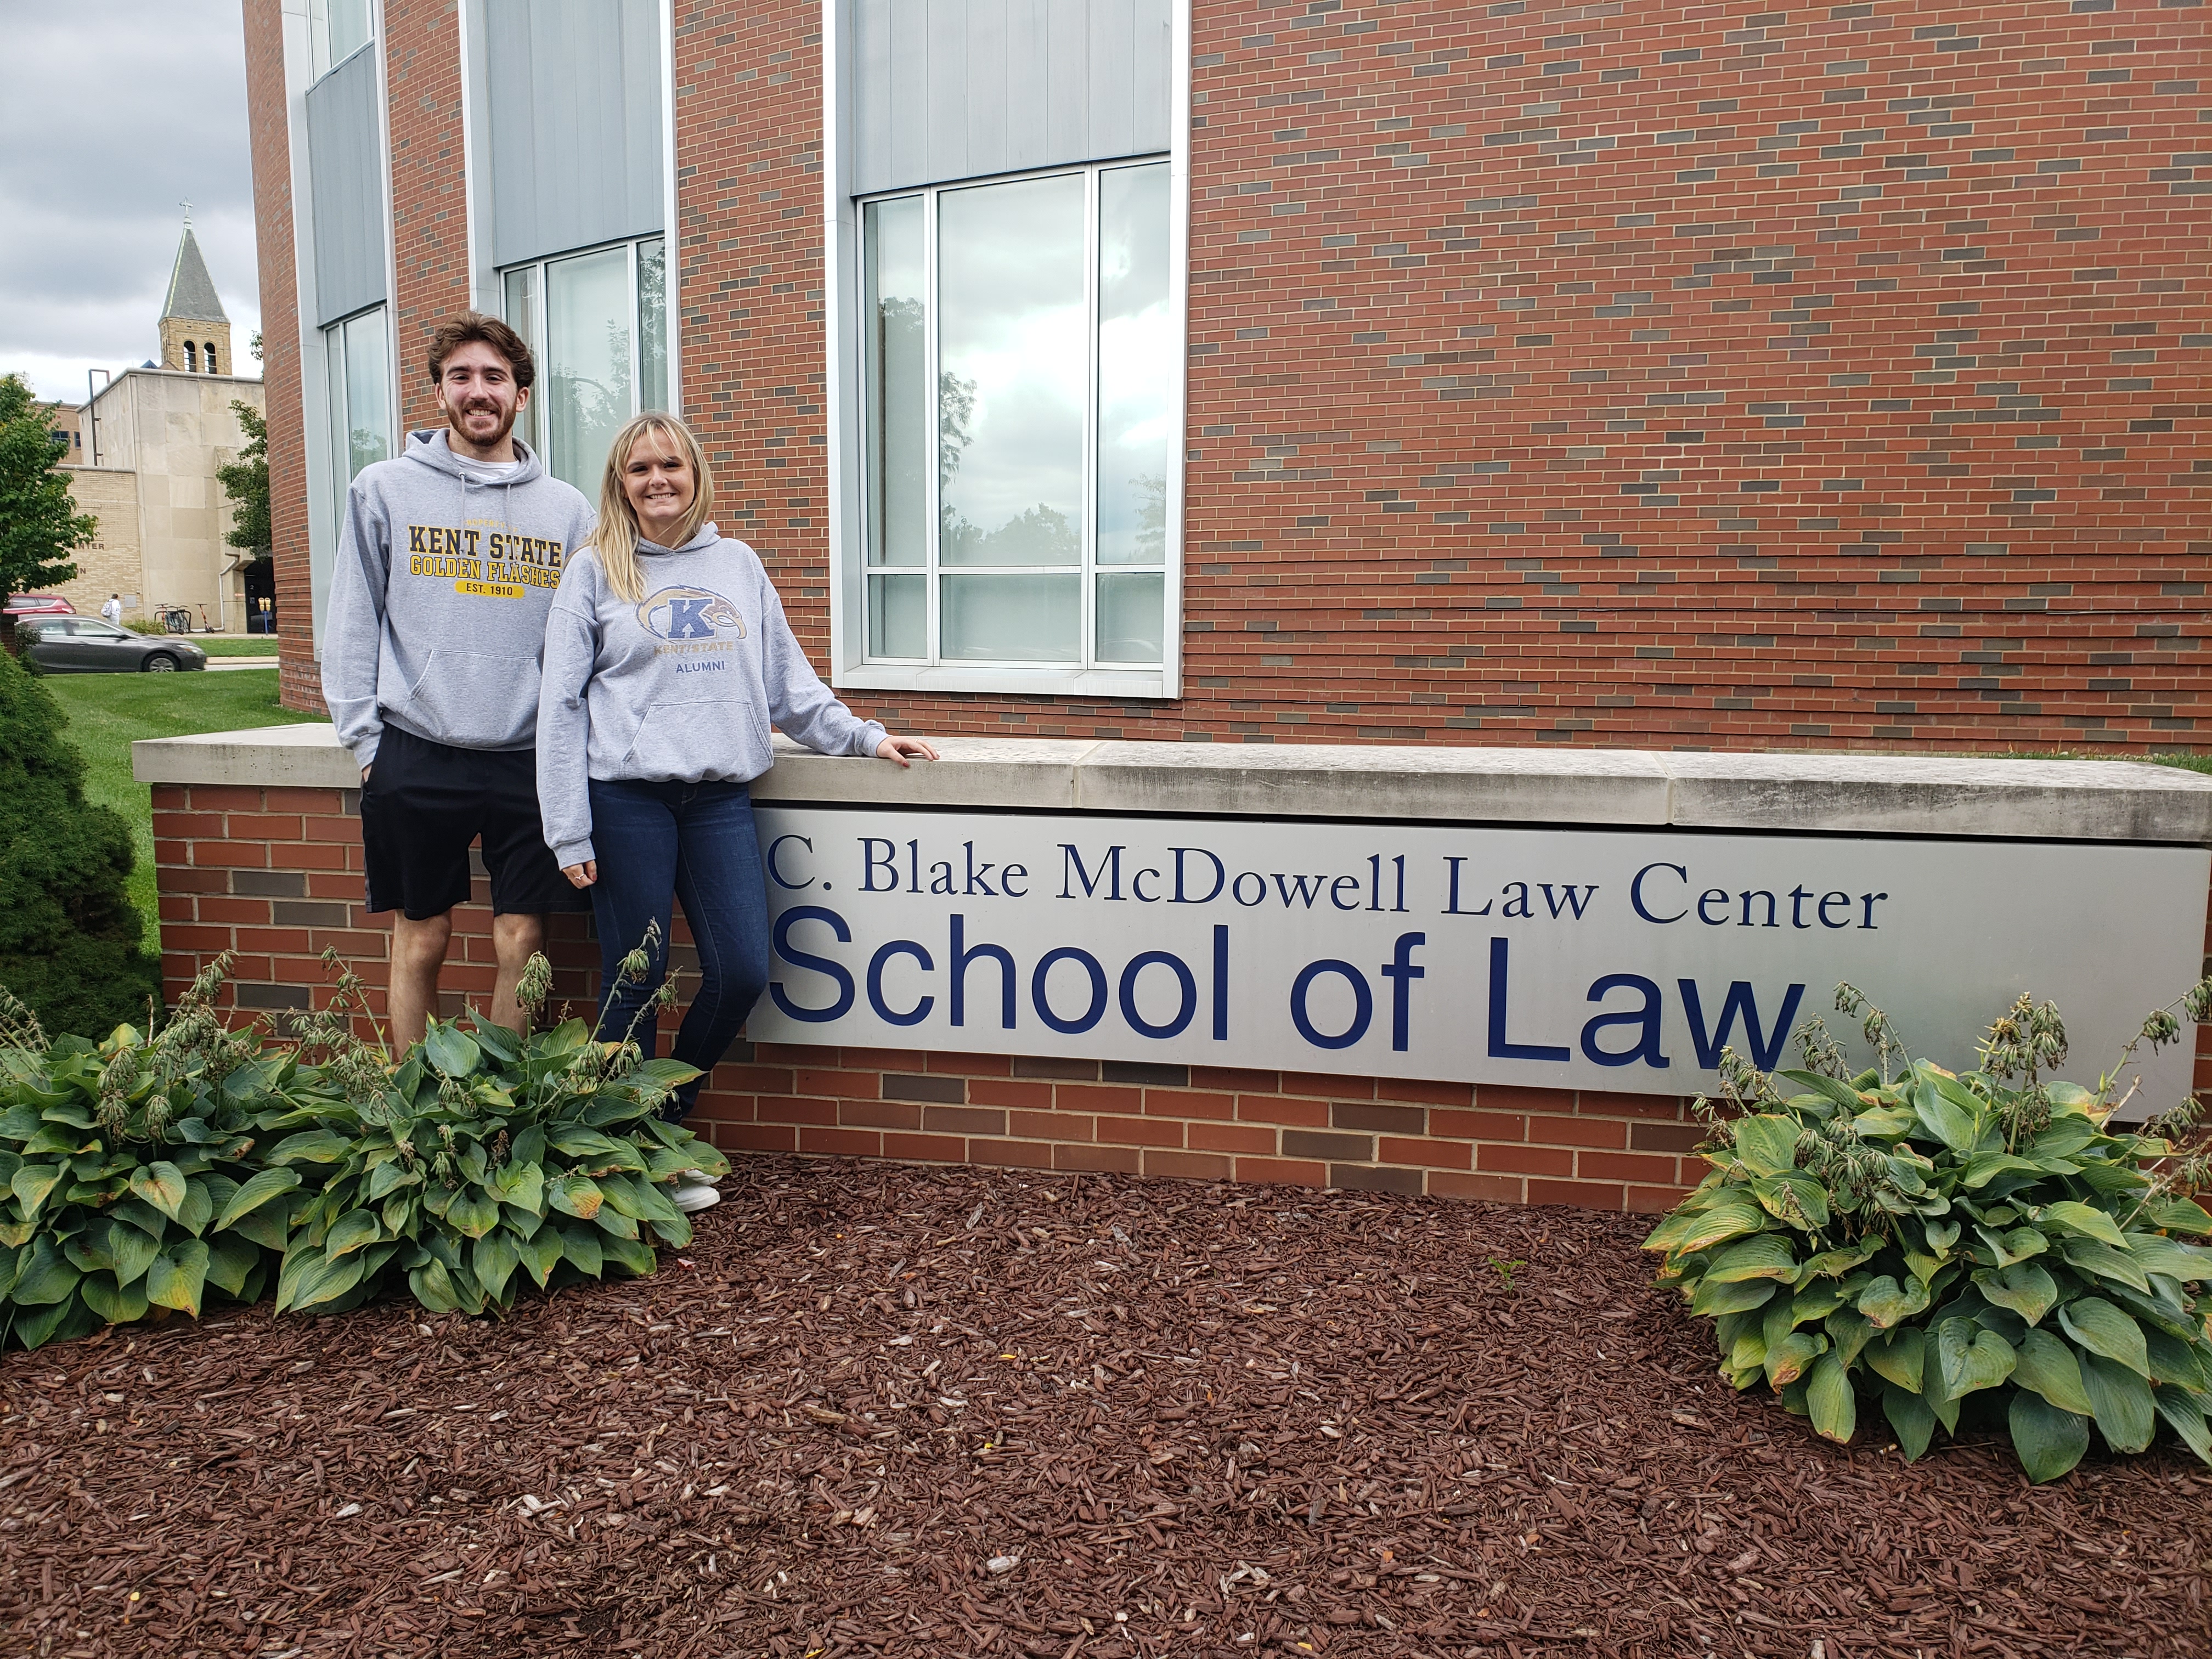 Blake C. McDowell Law Center School of Law